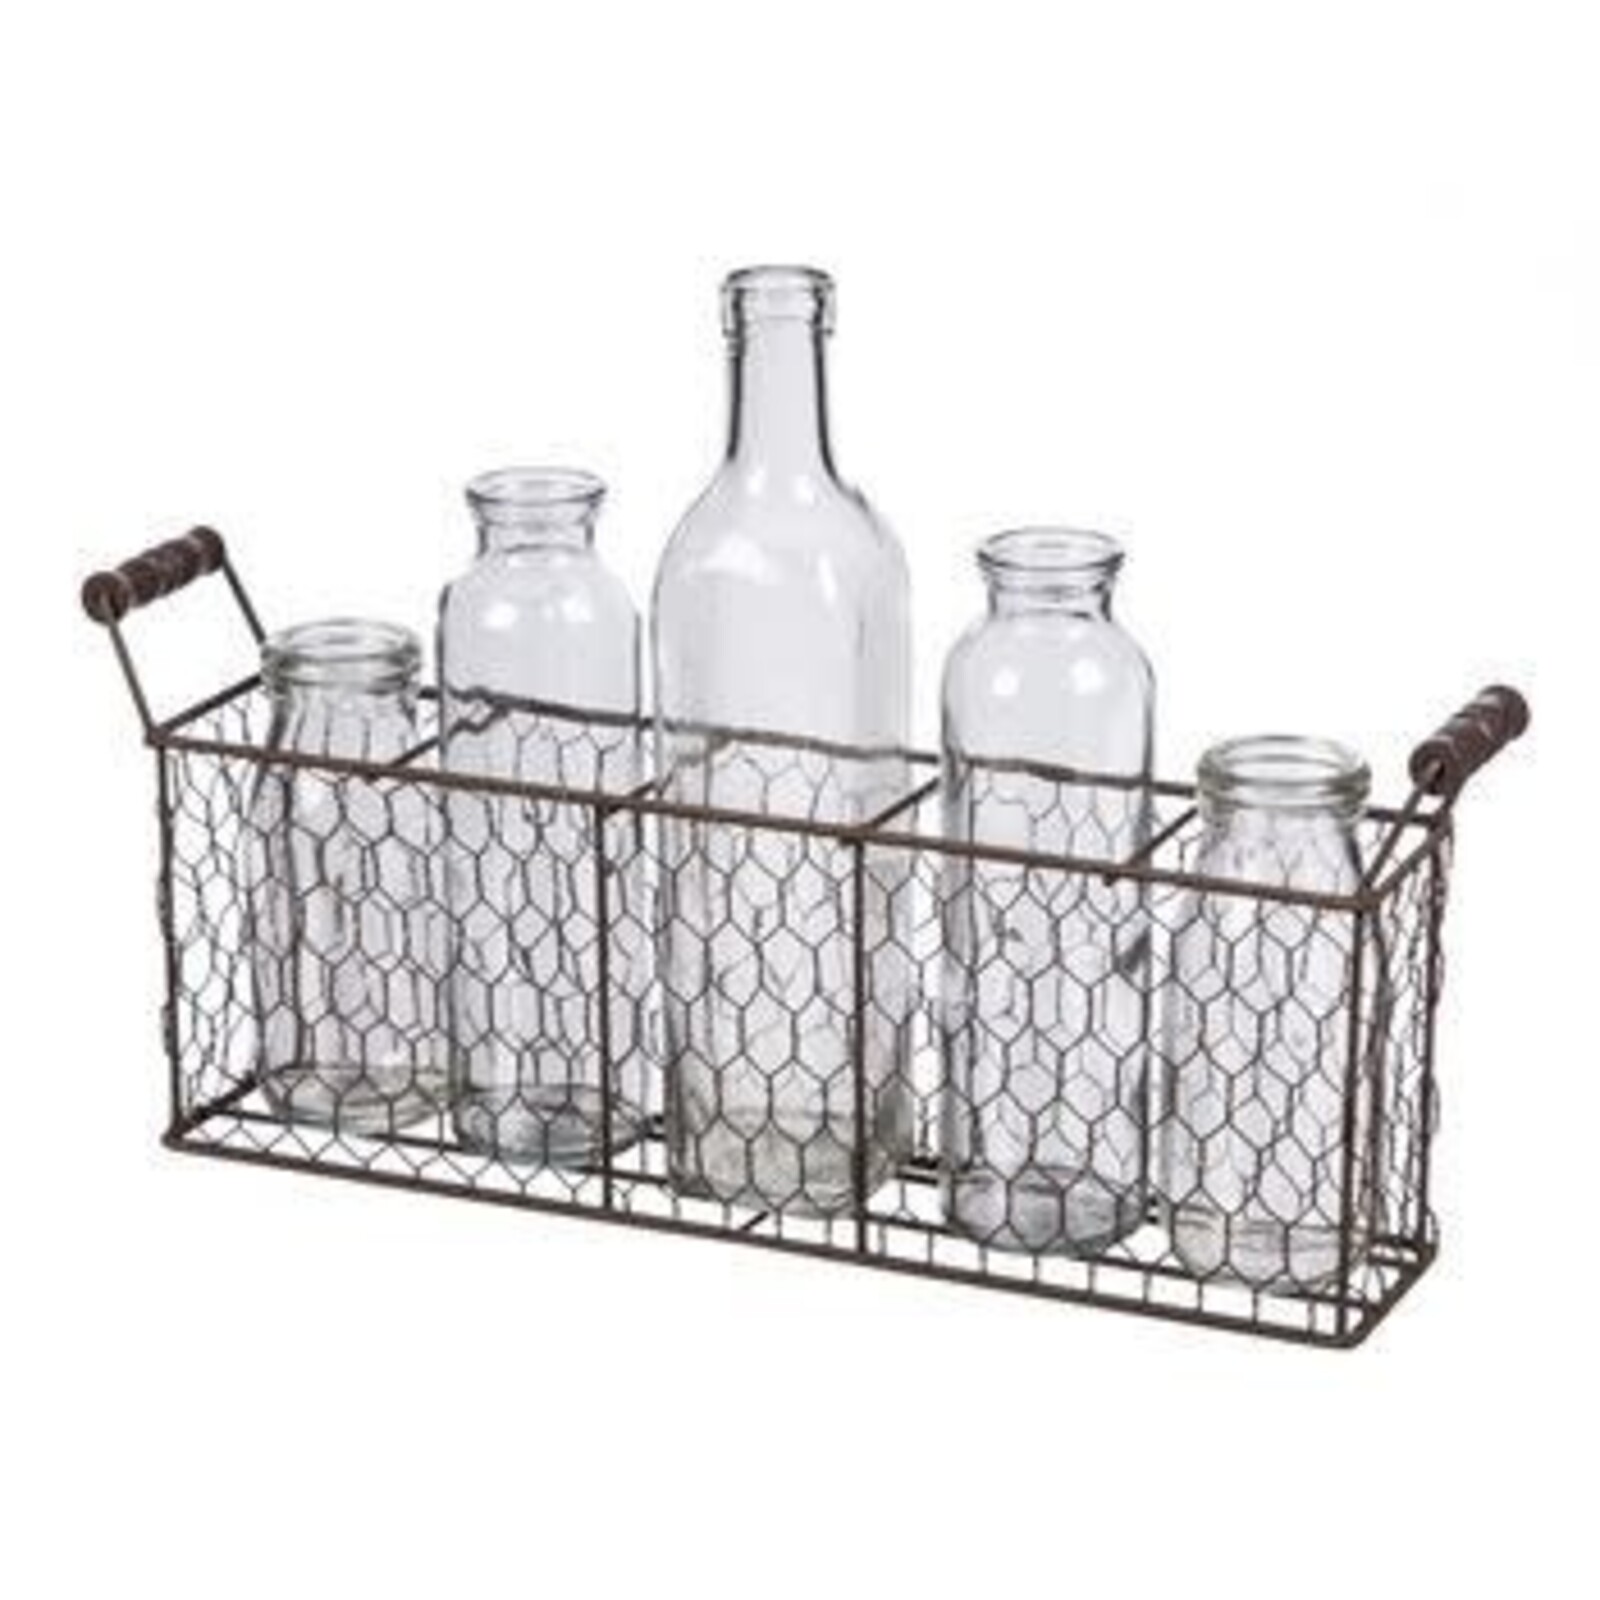 Evergreen Enterprises Wire Basket with 5 Bottles loading=